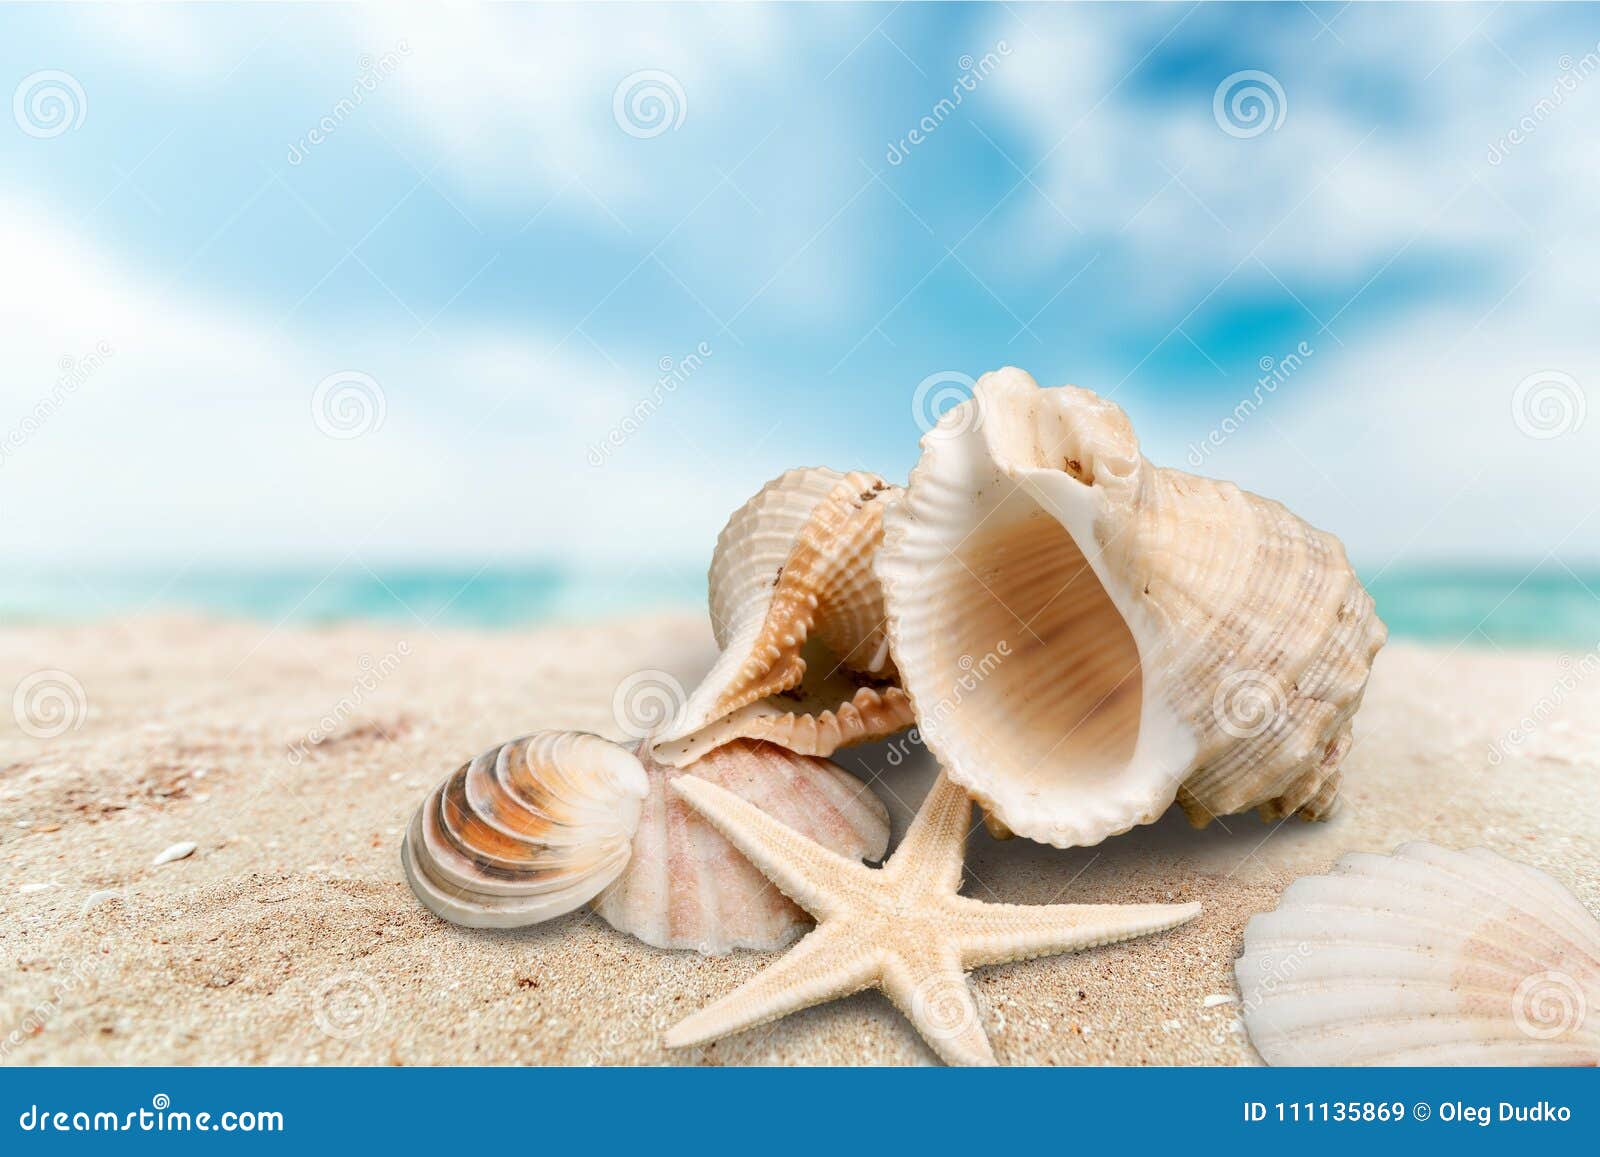 sea shells on sandy beach background